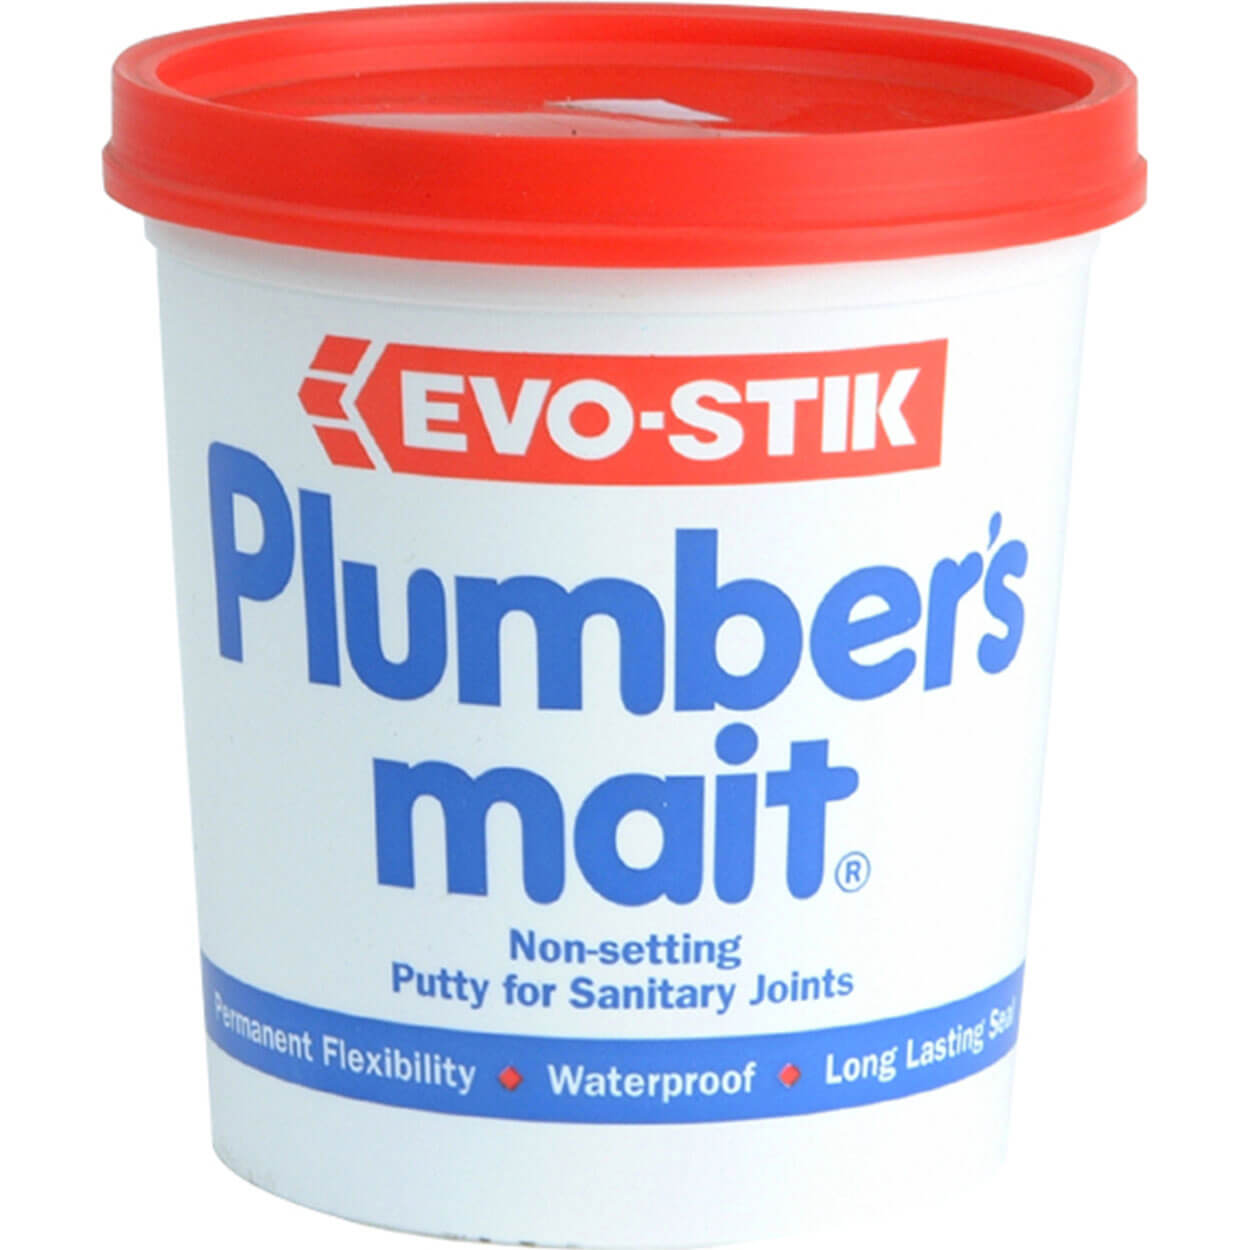 Image of Evo-stik Plumbers Mait 1.5kg